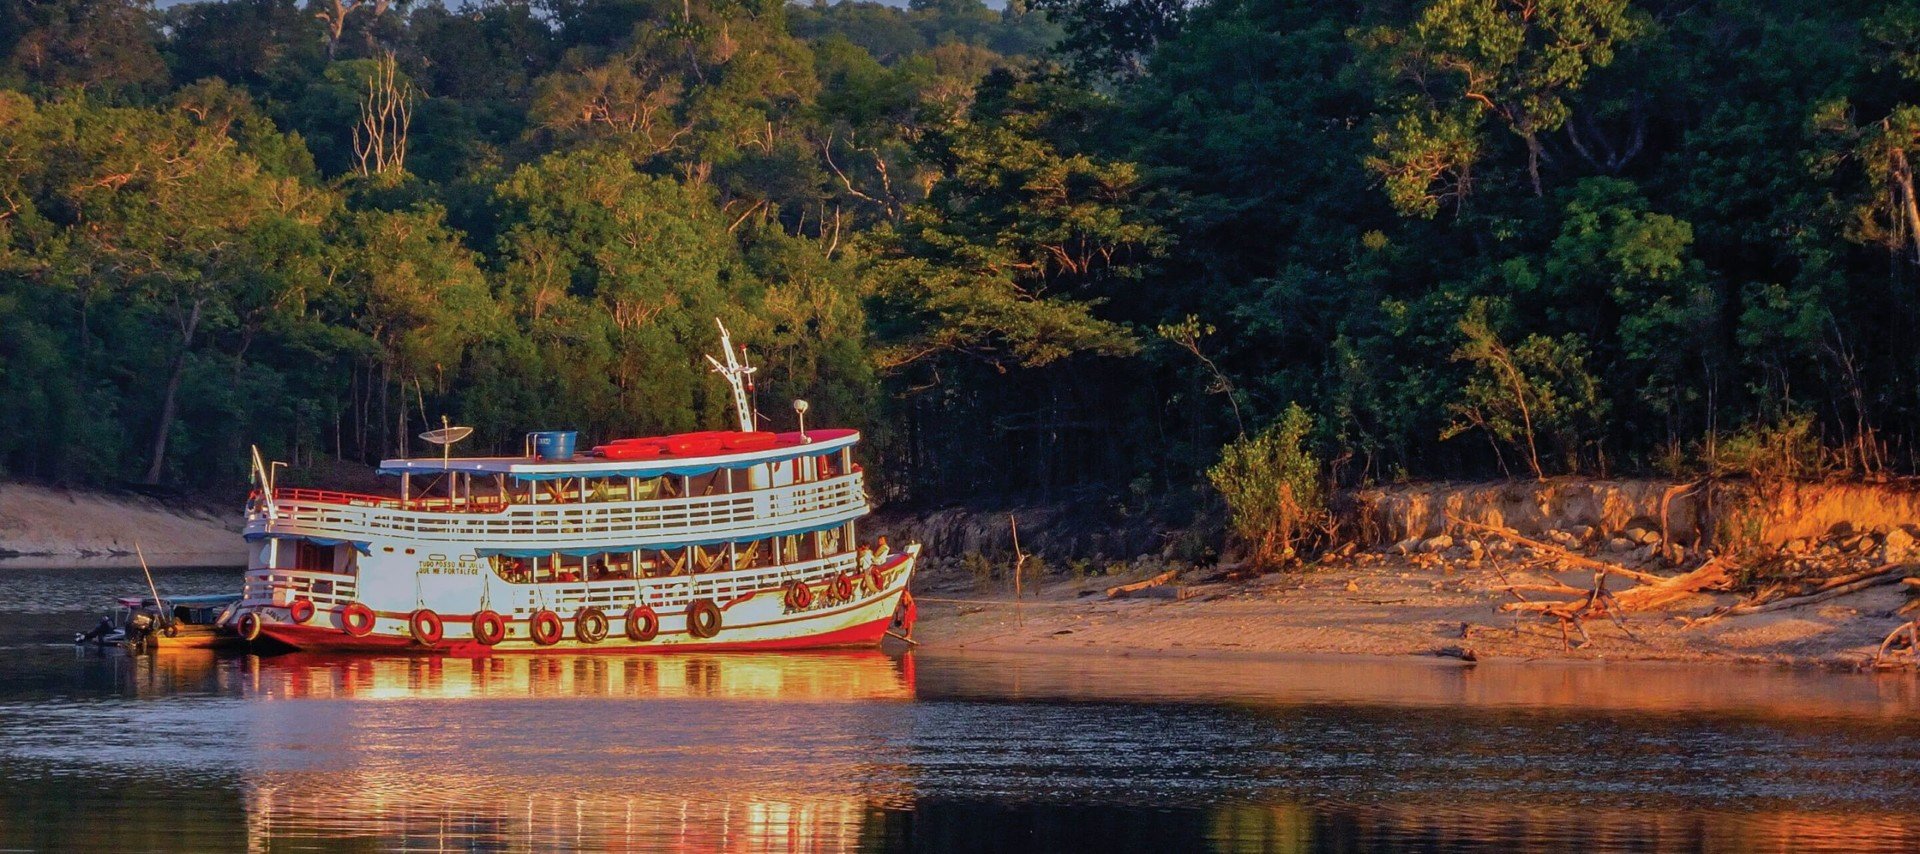 Amazon River Cruise during Sunset